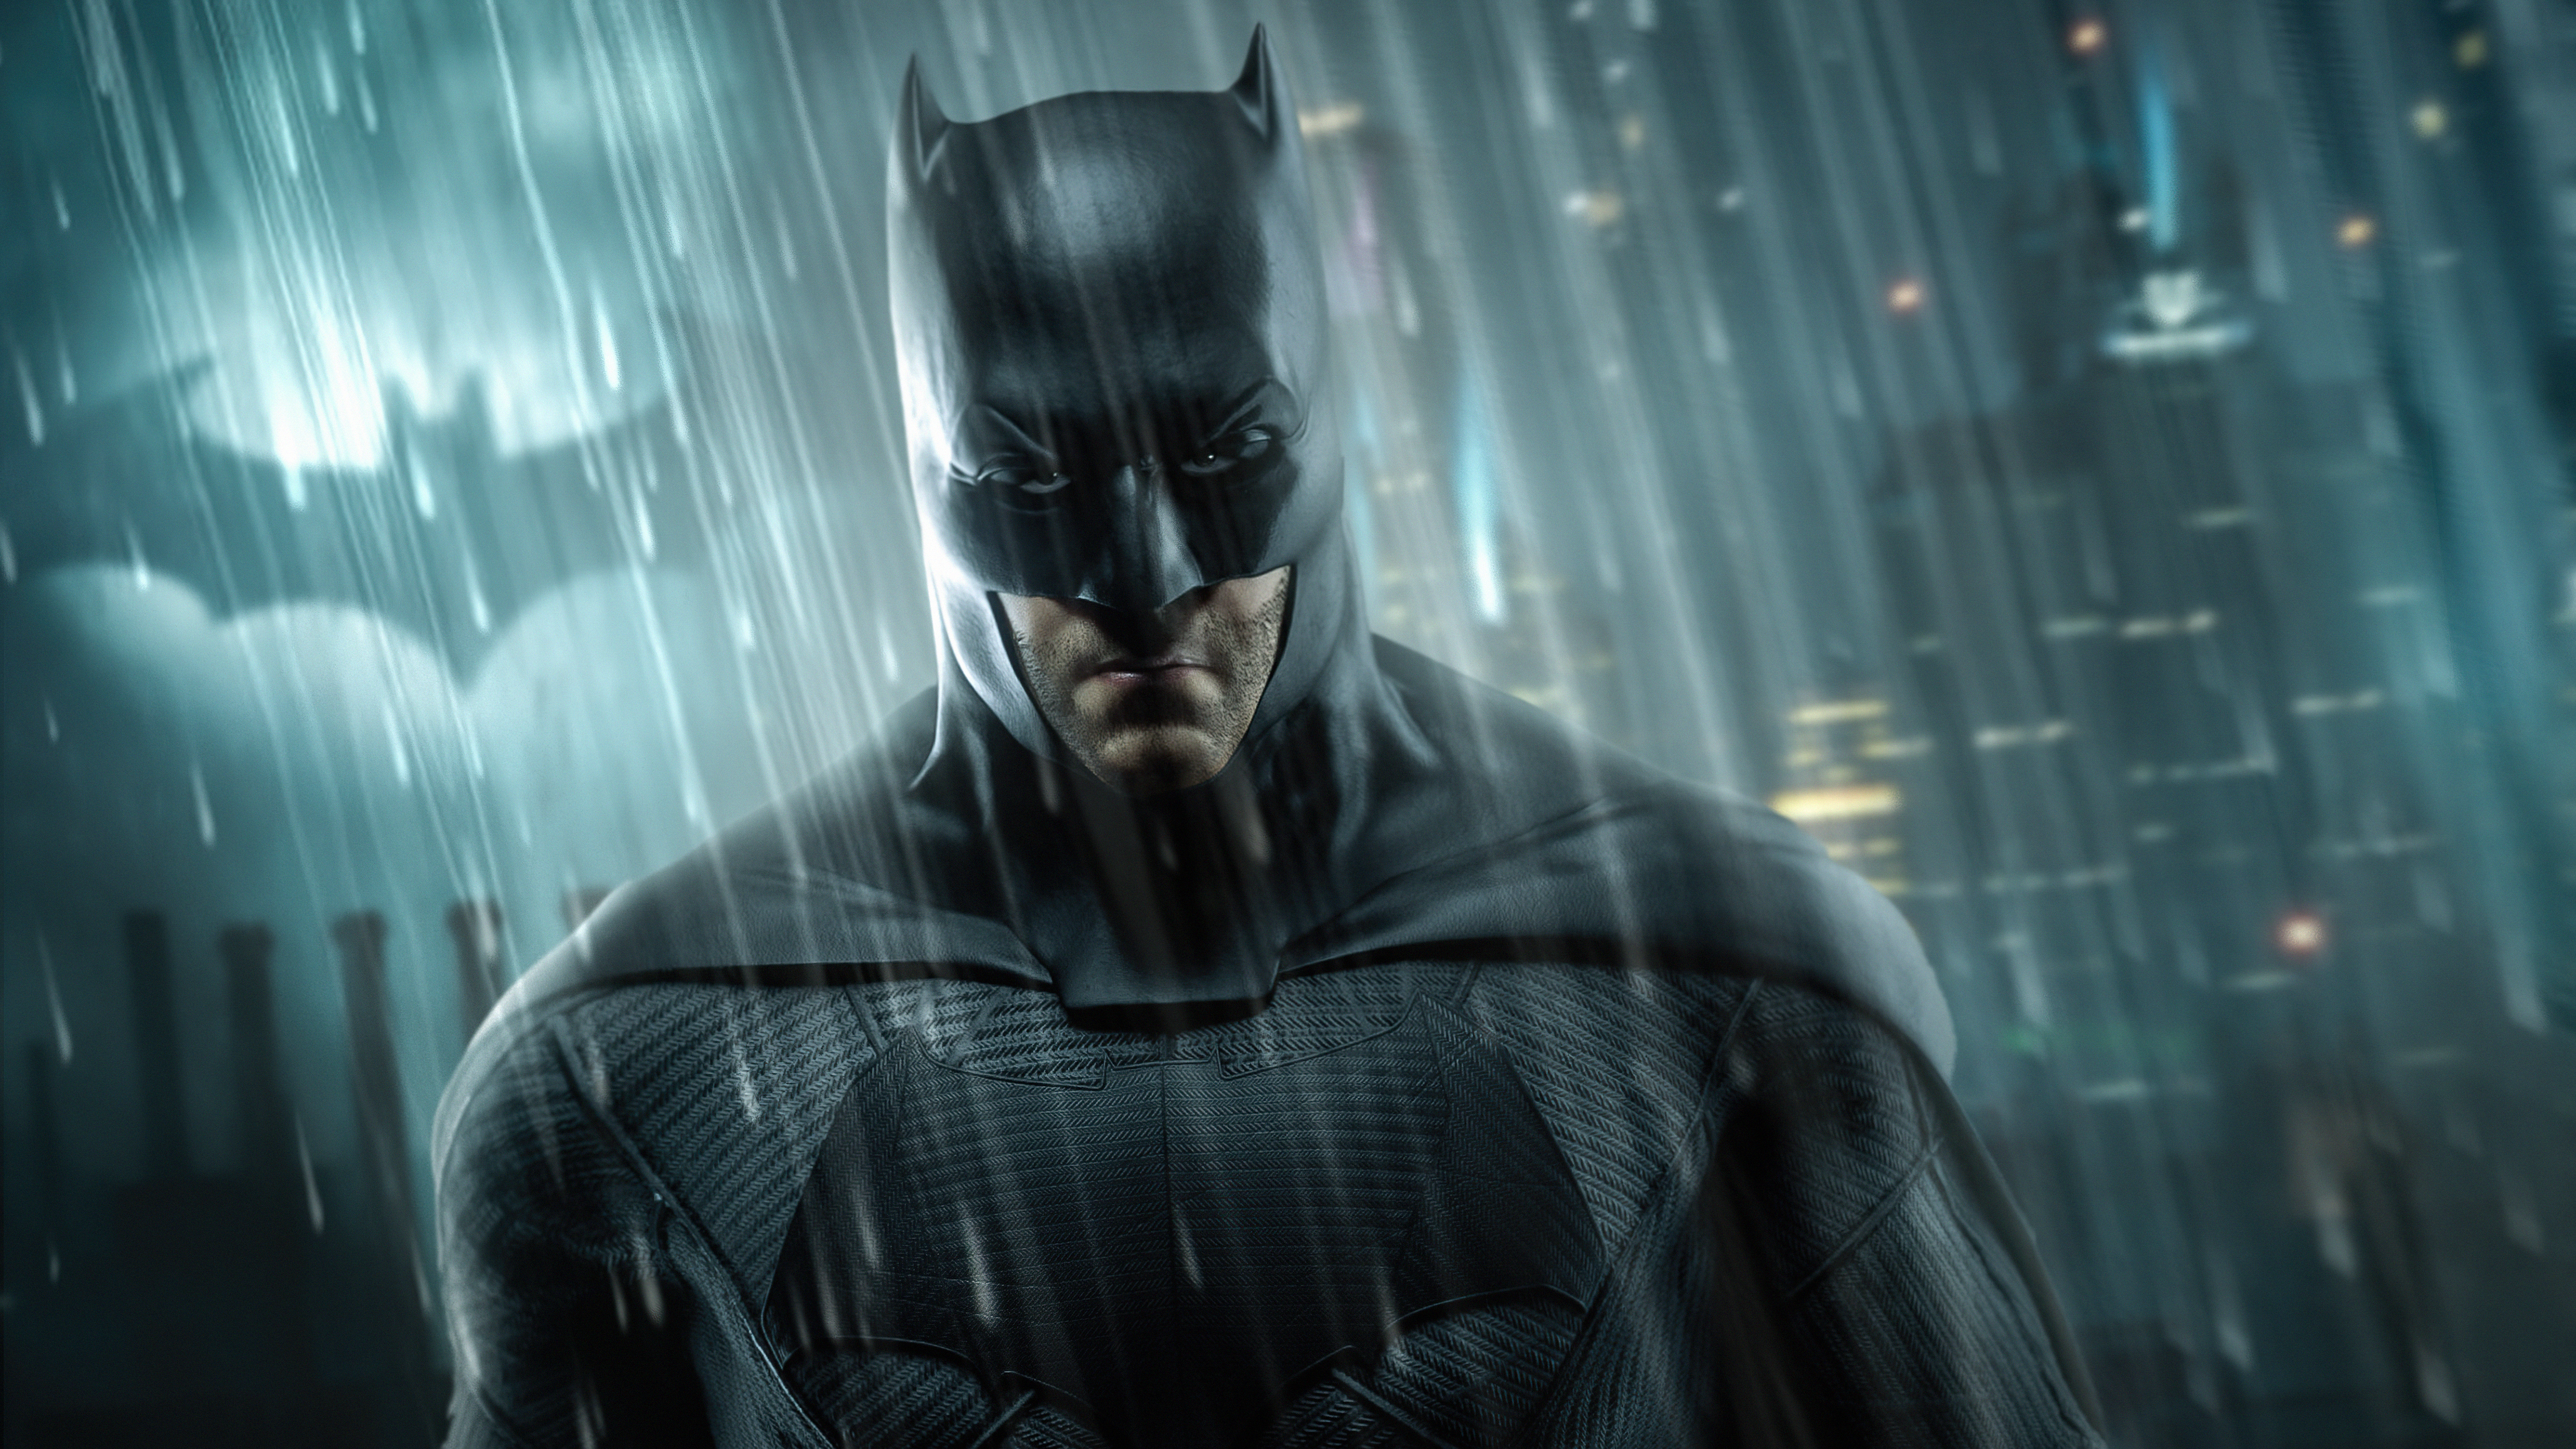 The Batman Movie Wallpaper Full HD Free Download for Desktop